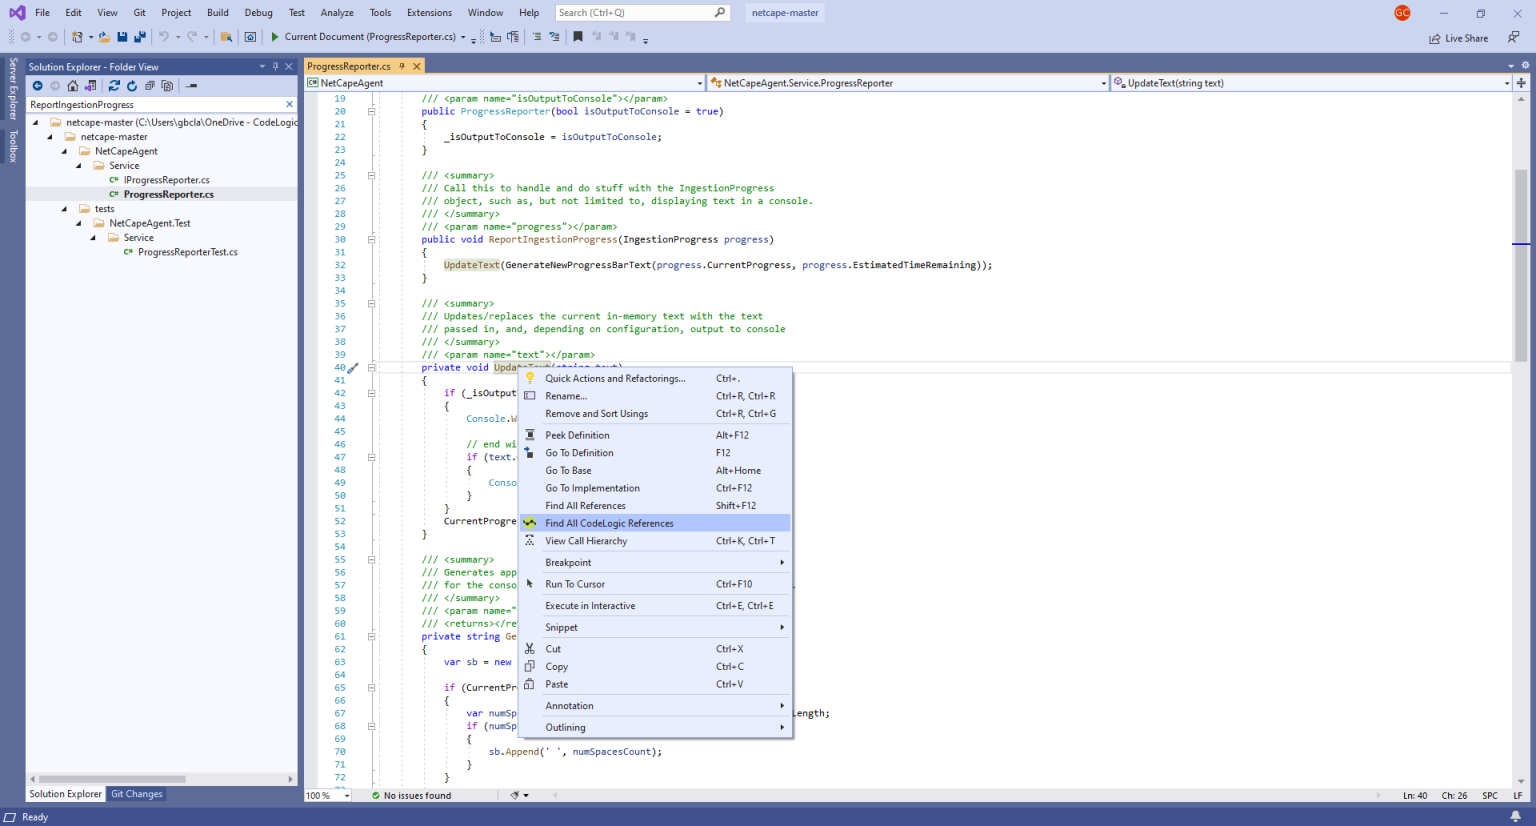 Finding CodeLogic references in Visual Studio